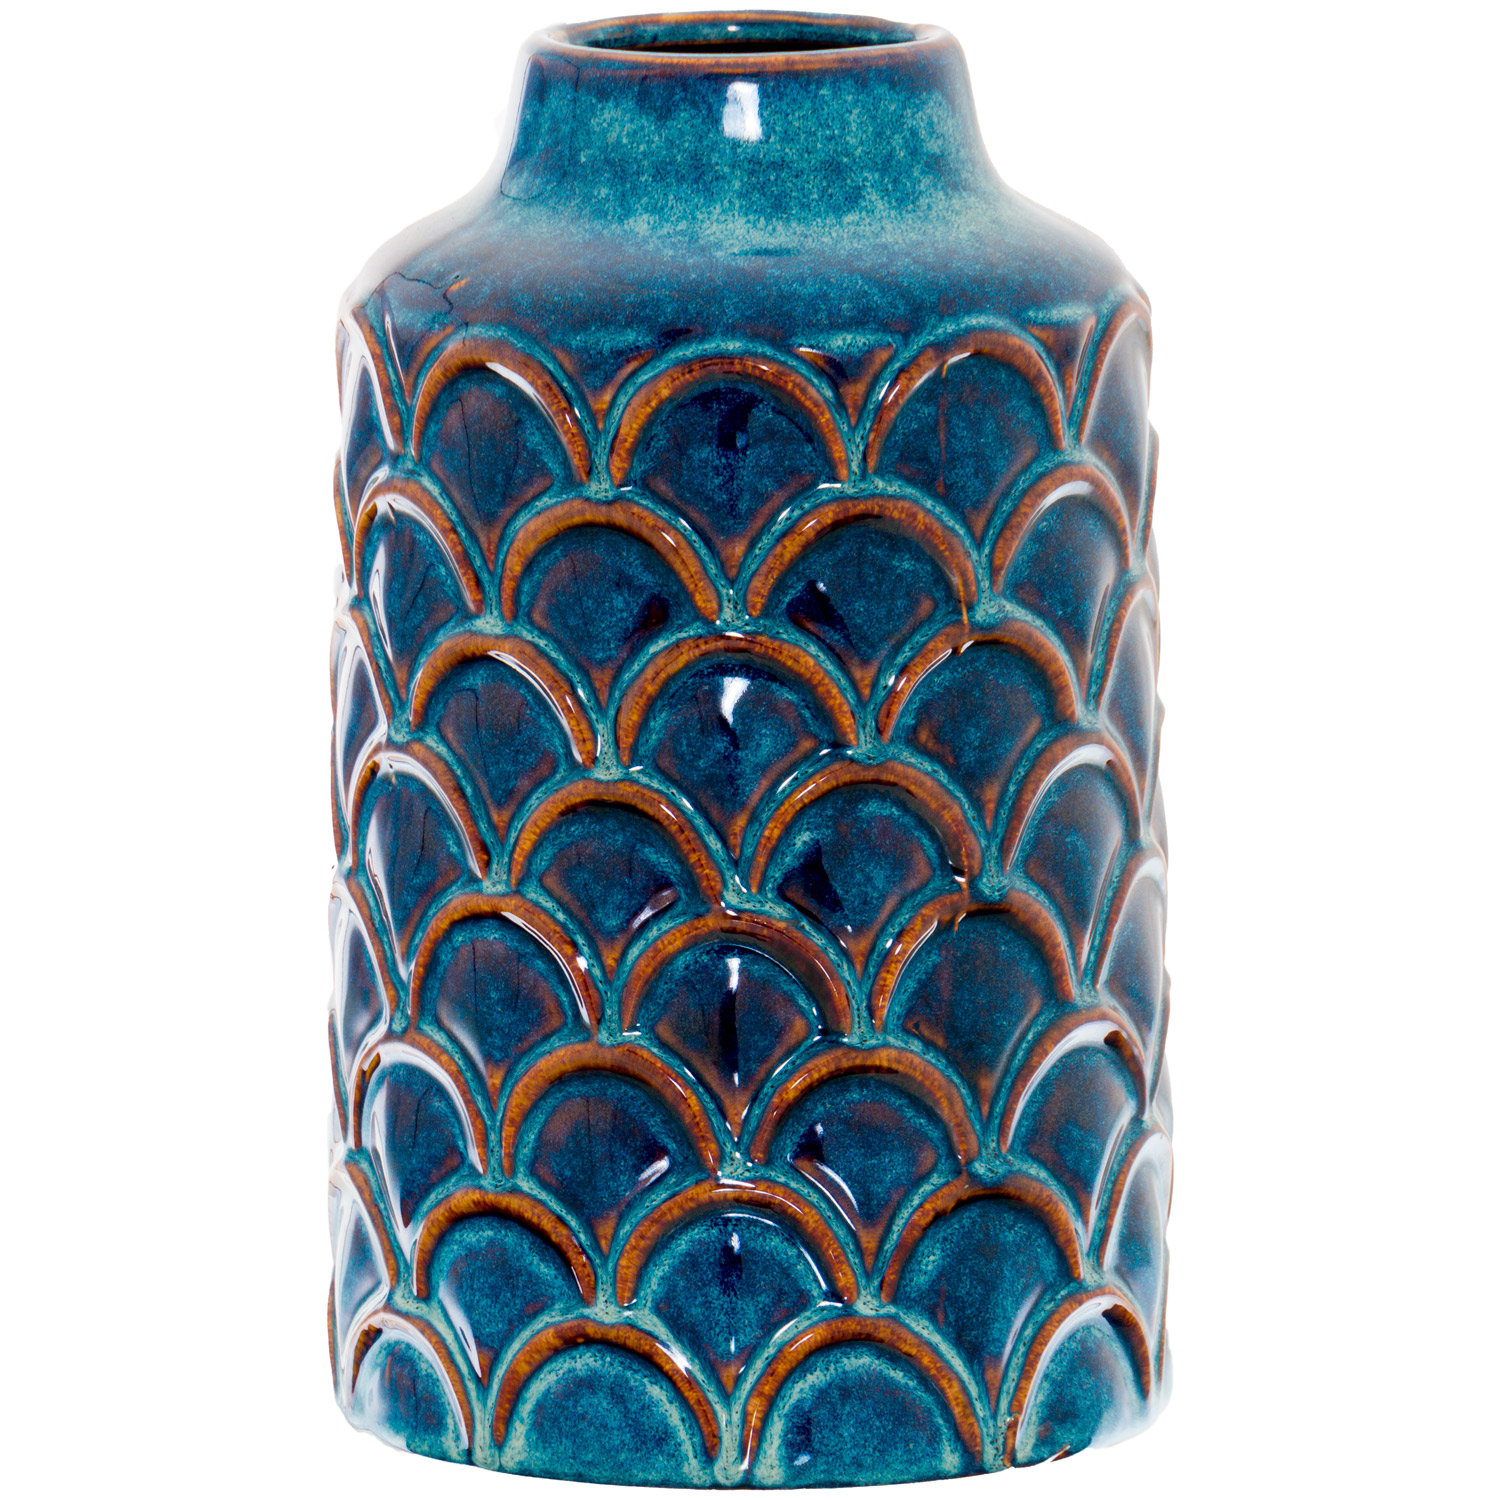 Seville Collection Scalloped Indigo Vase - Image 1